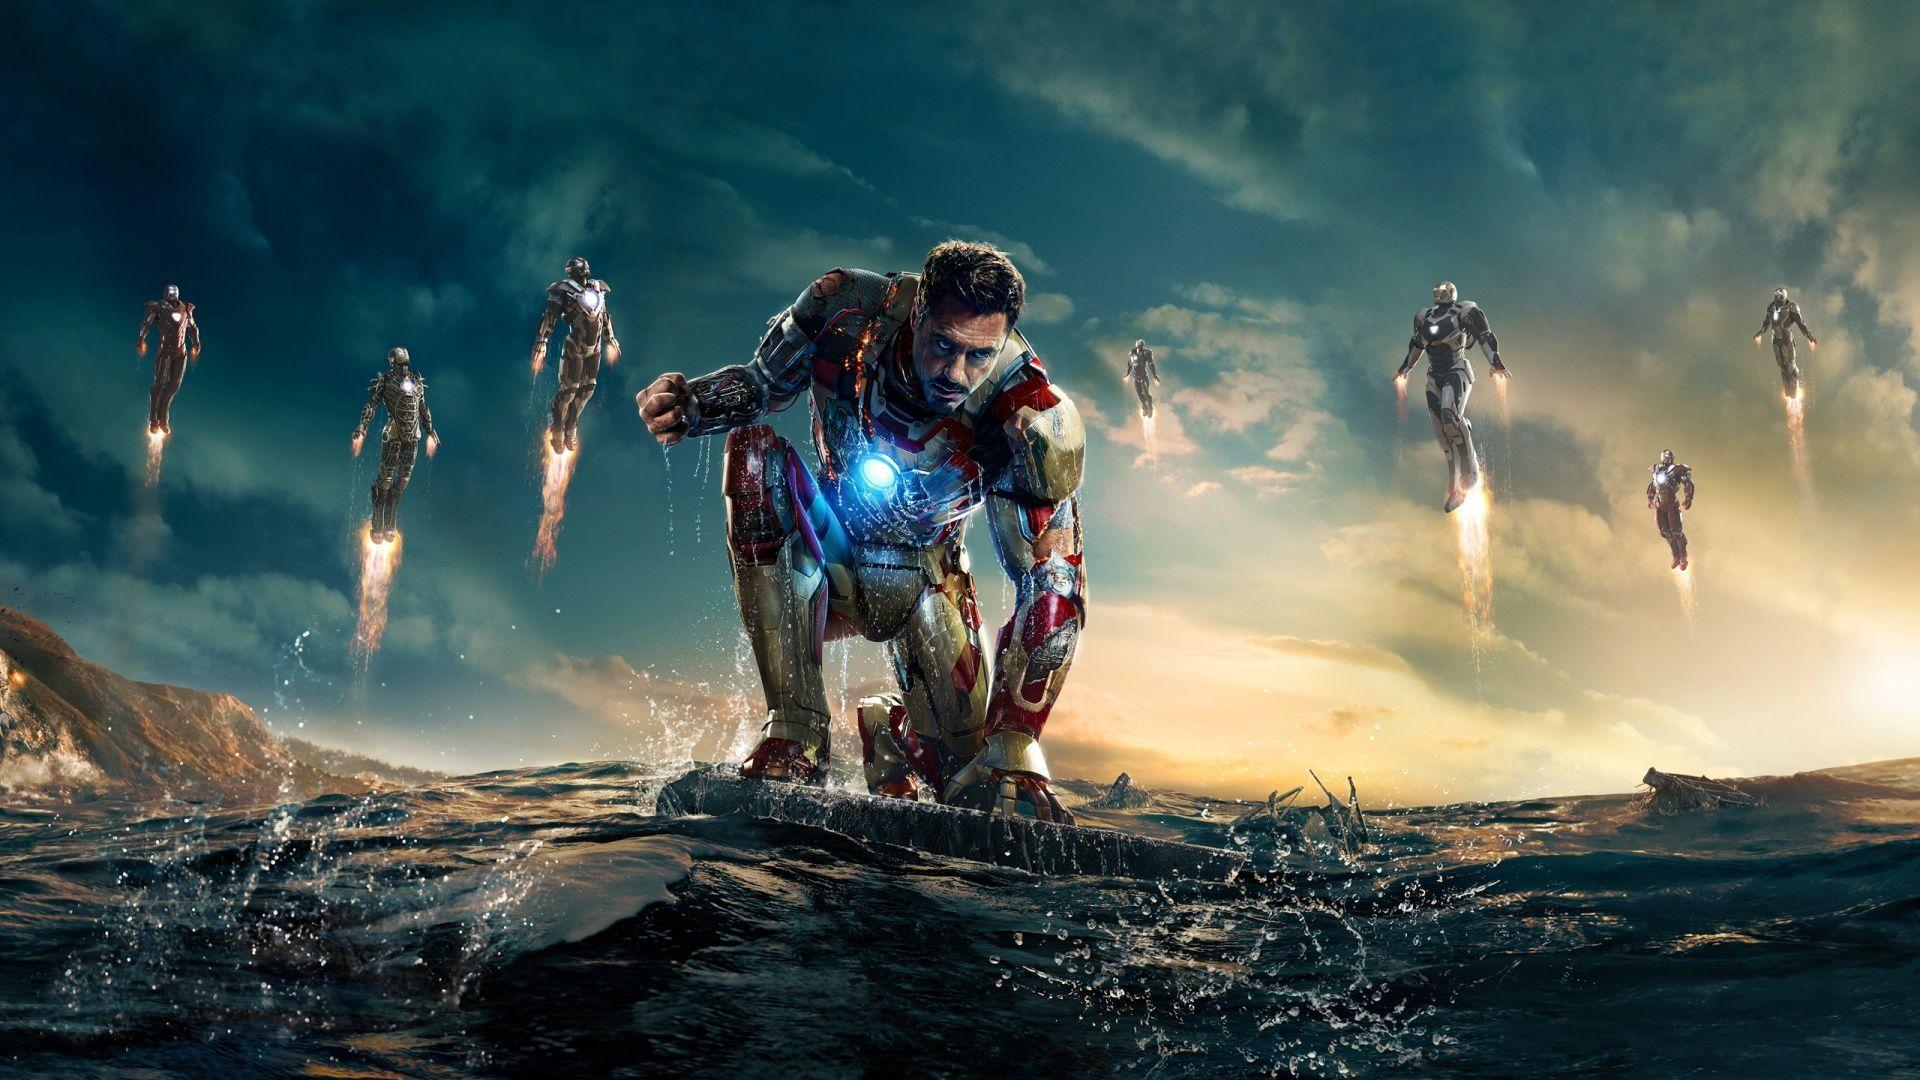 HD #Iron Man #Wallpaper For #iPhone 5 5s. Geek's Top Ten